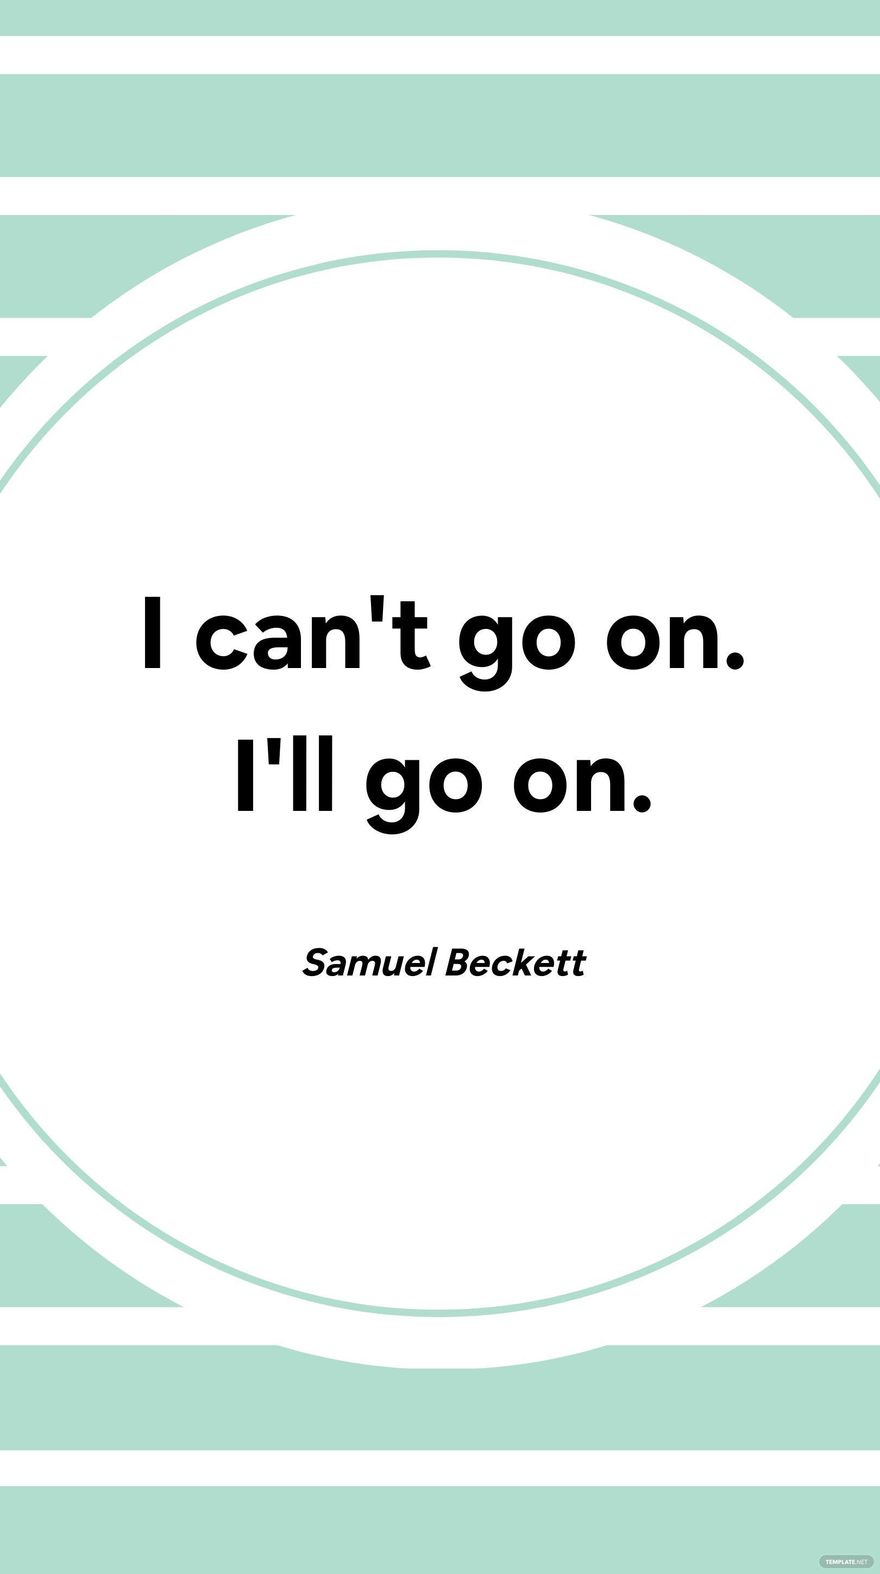 Free Samuel Beckett - I can't go on. I'll go on. in JPG